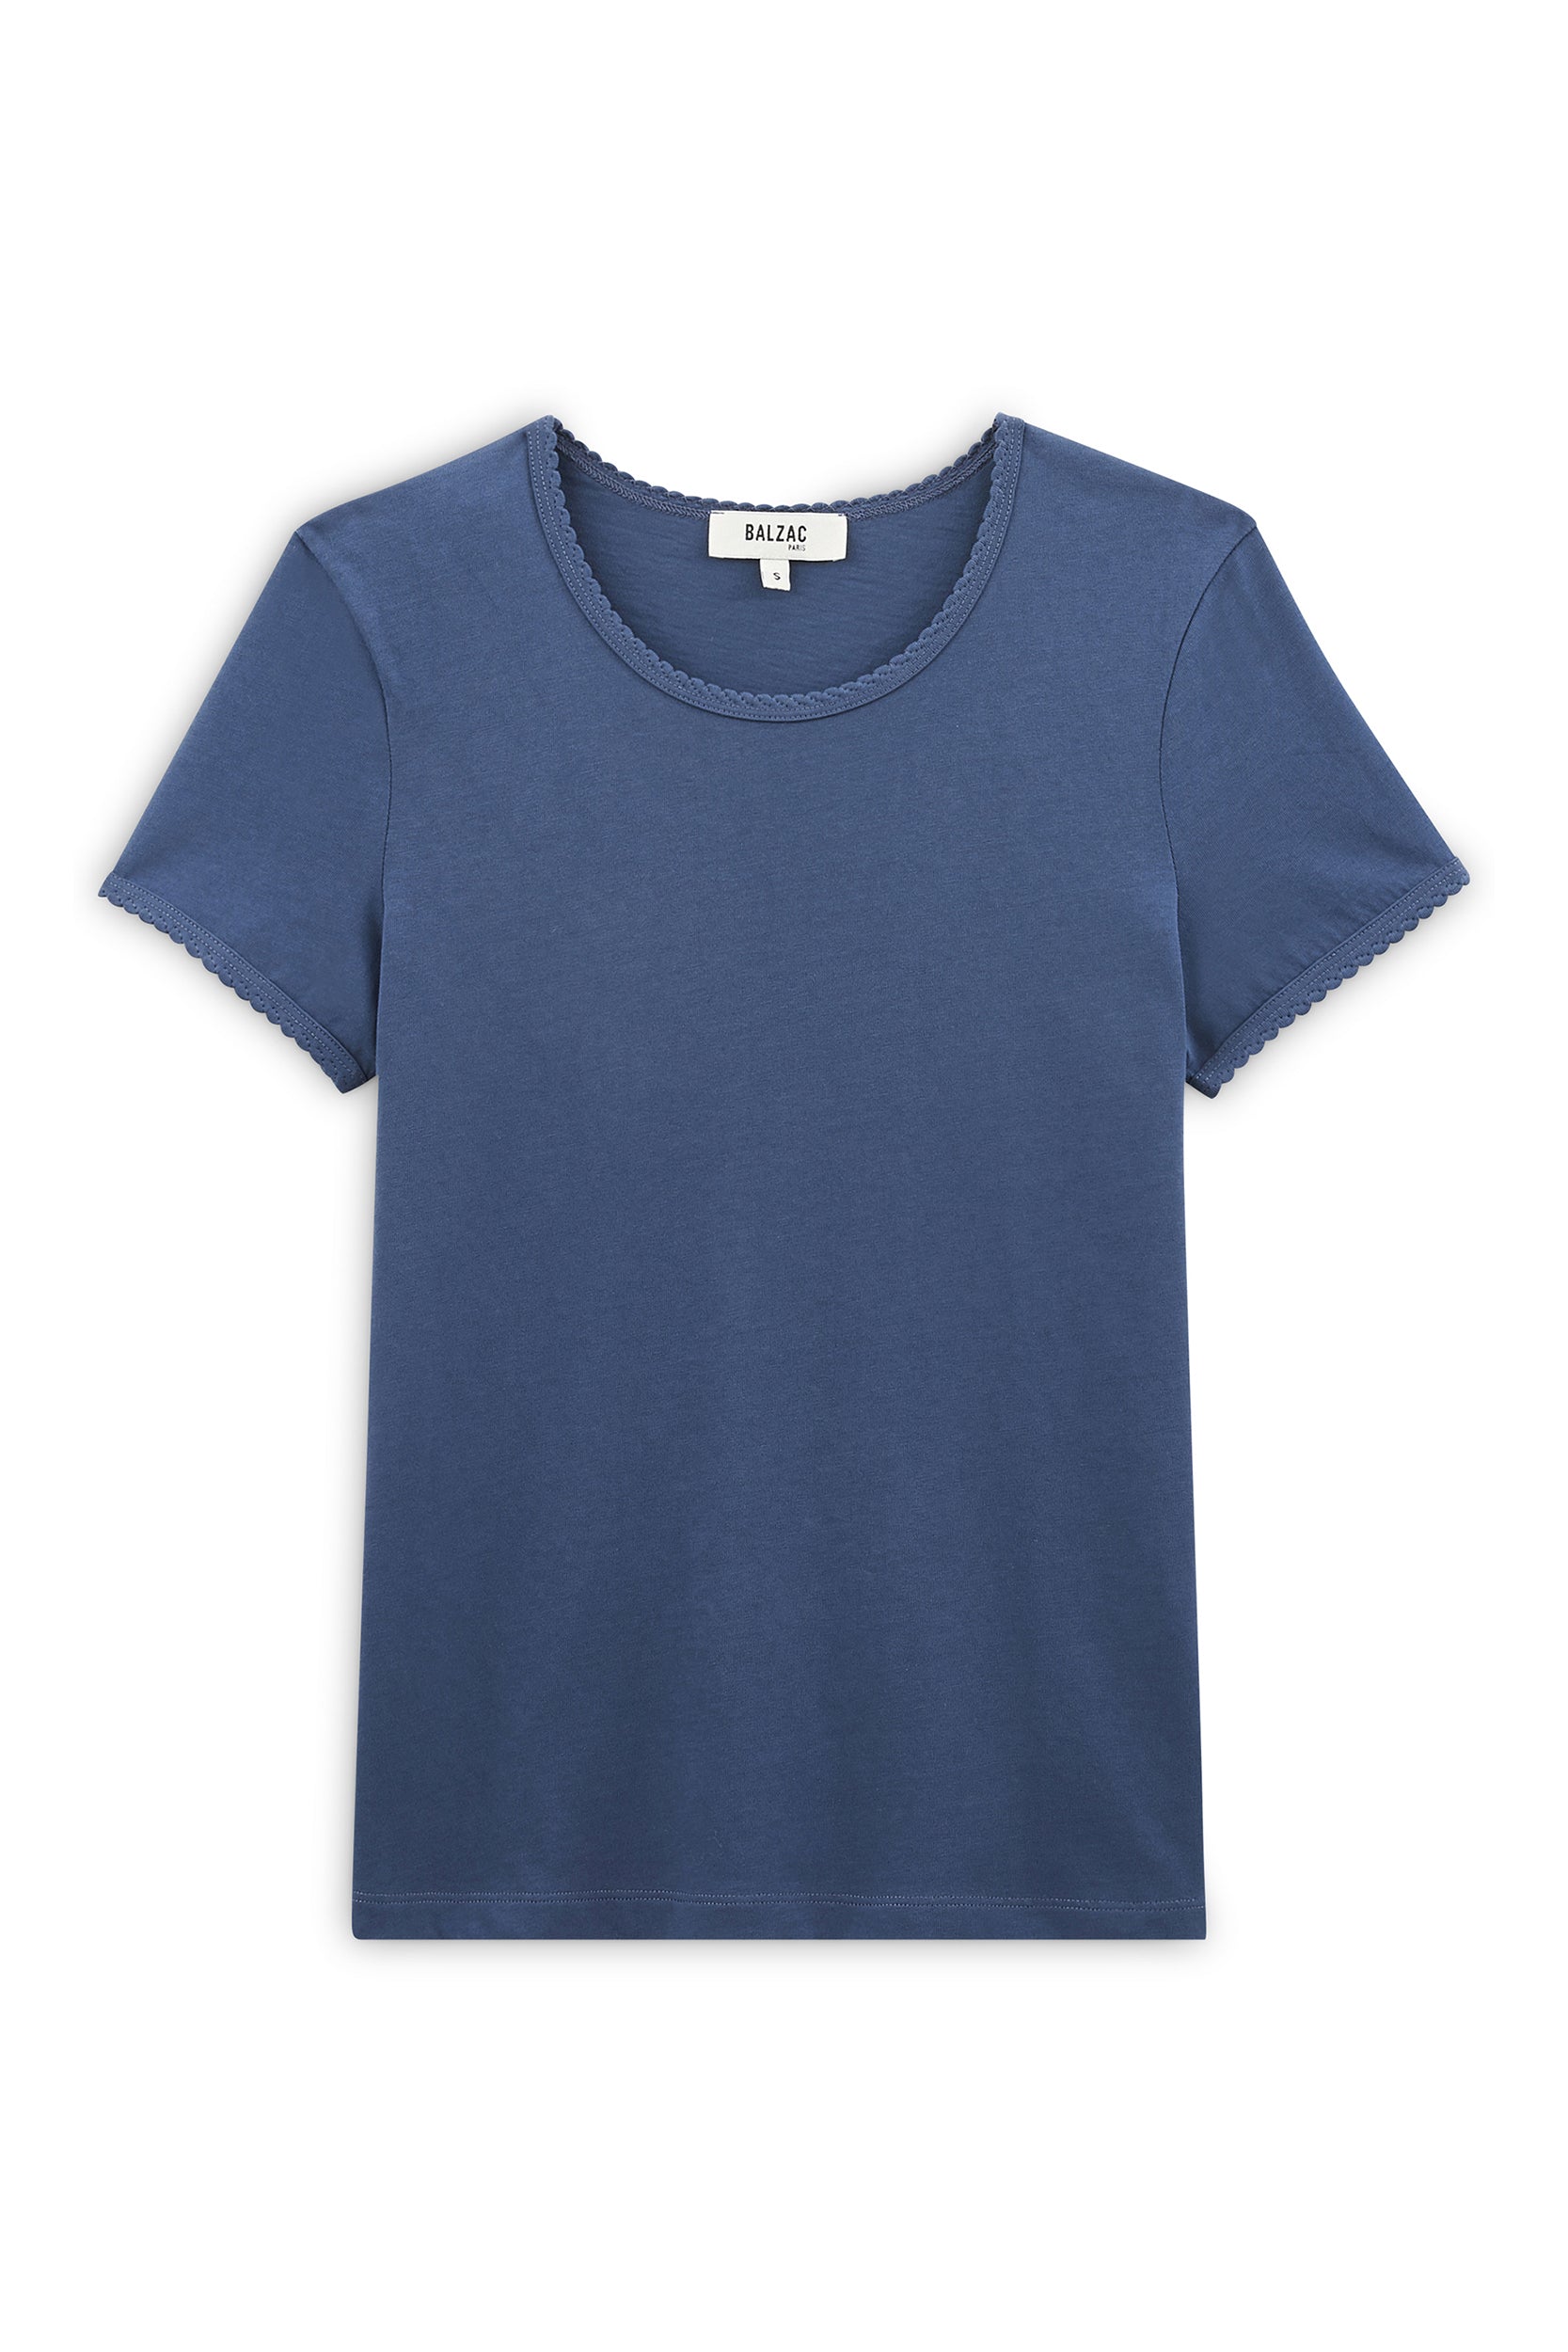 Willow gray blue t-shirt